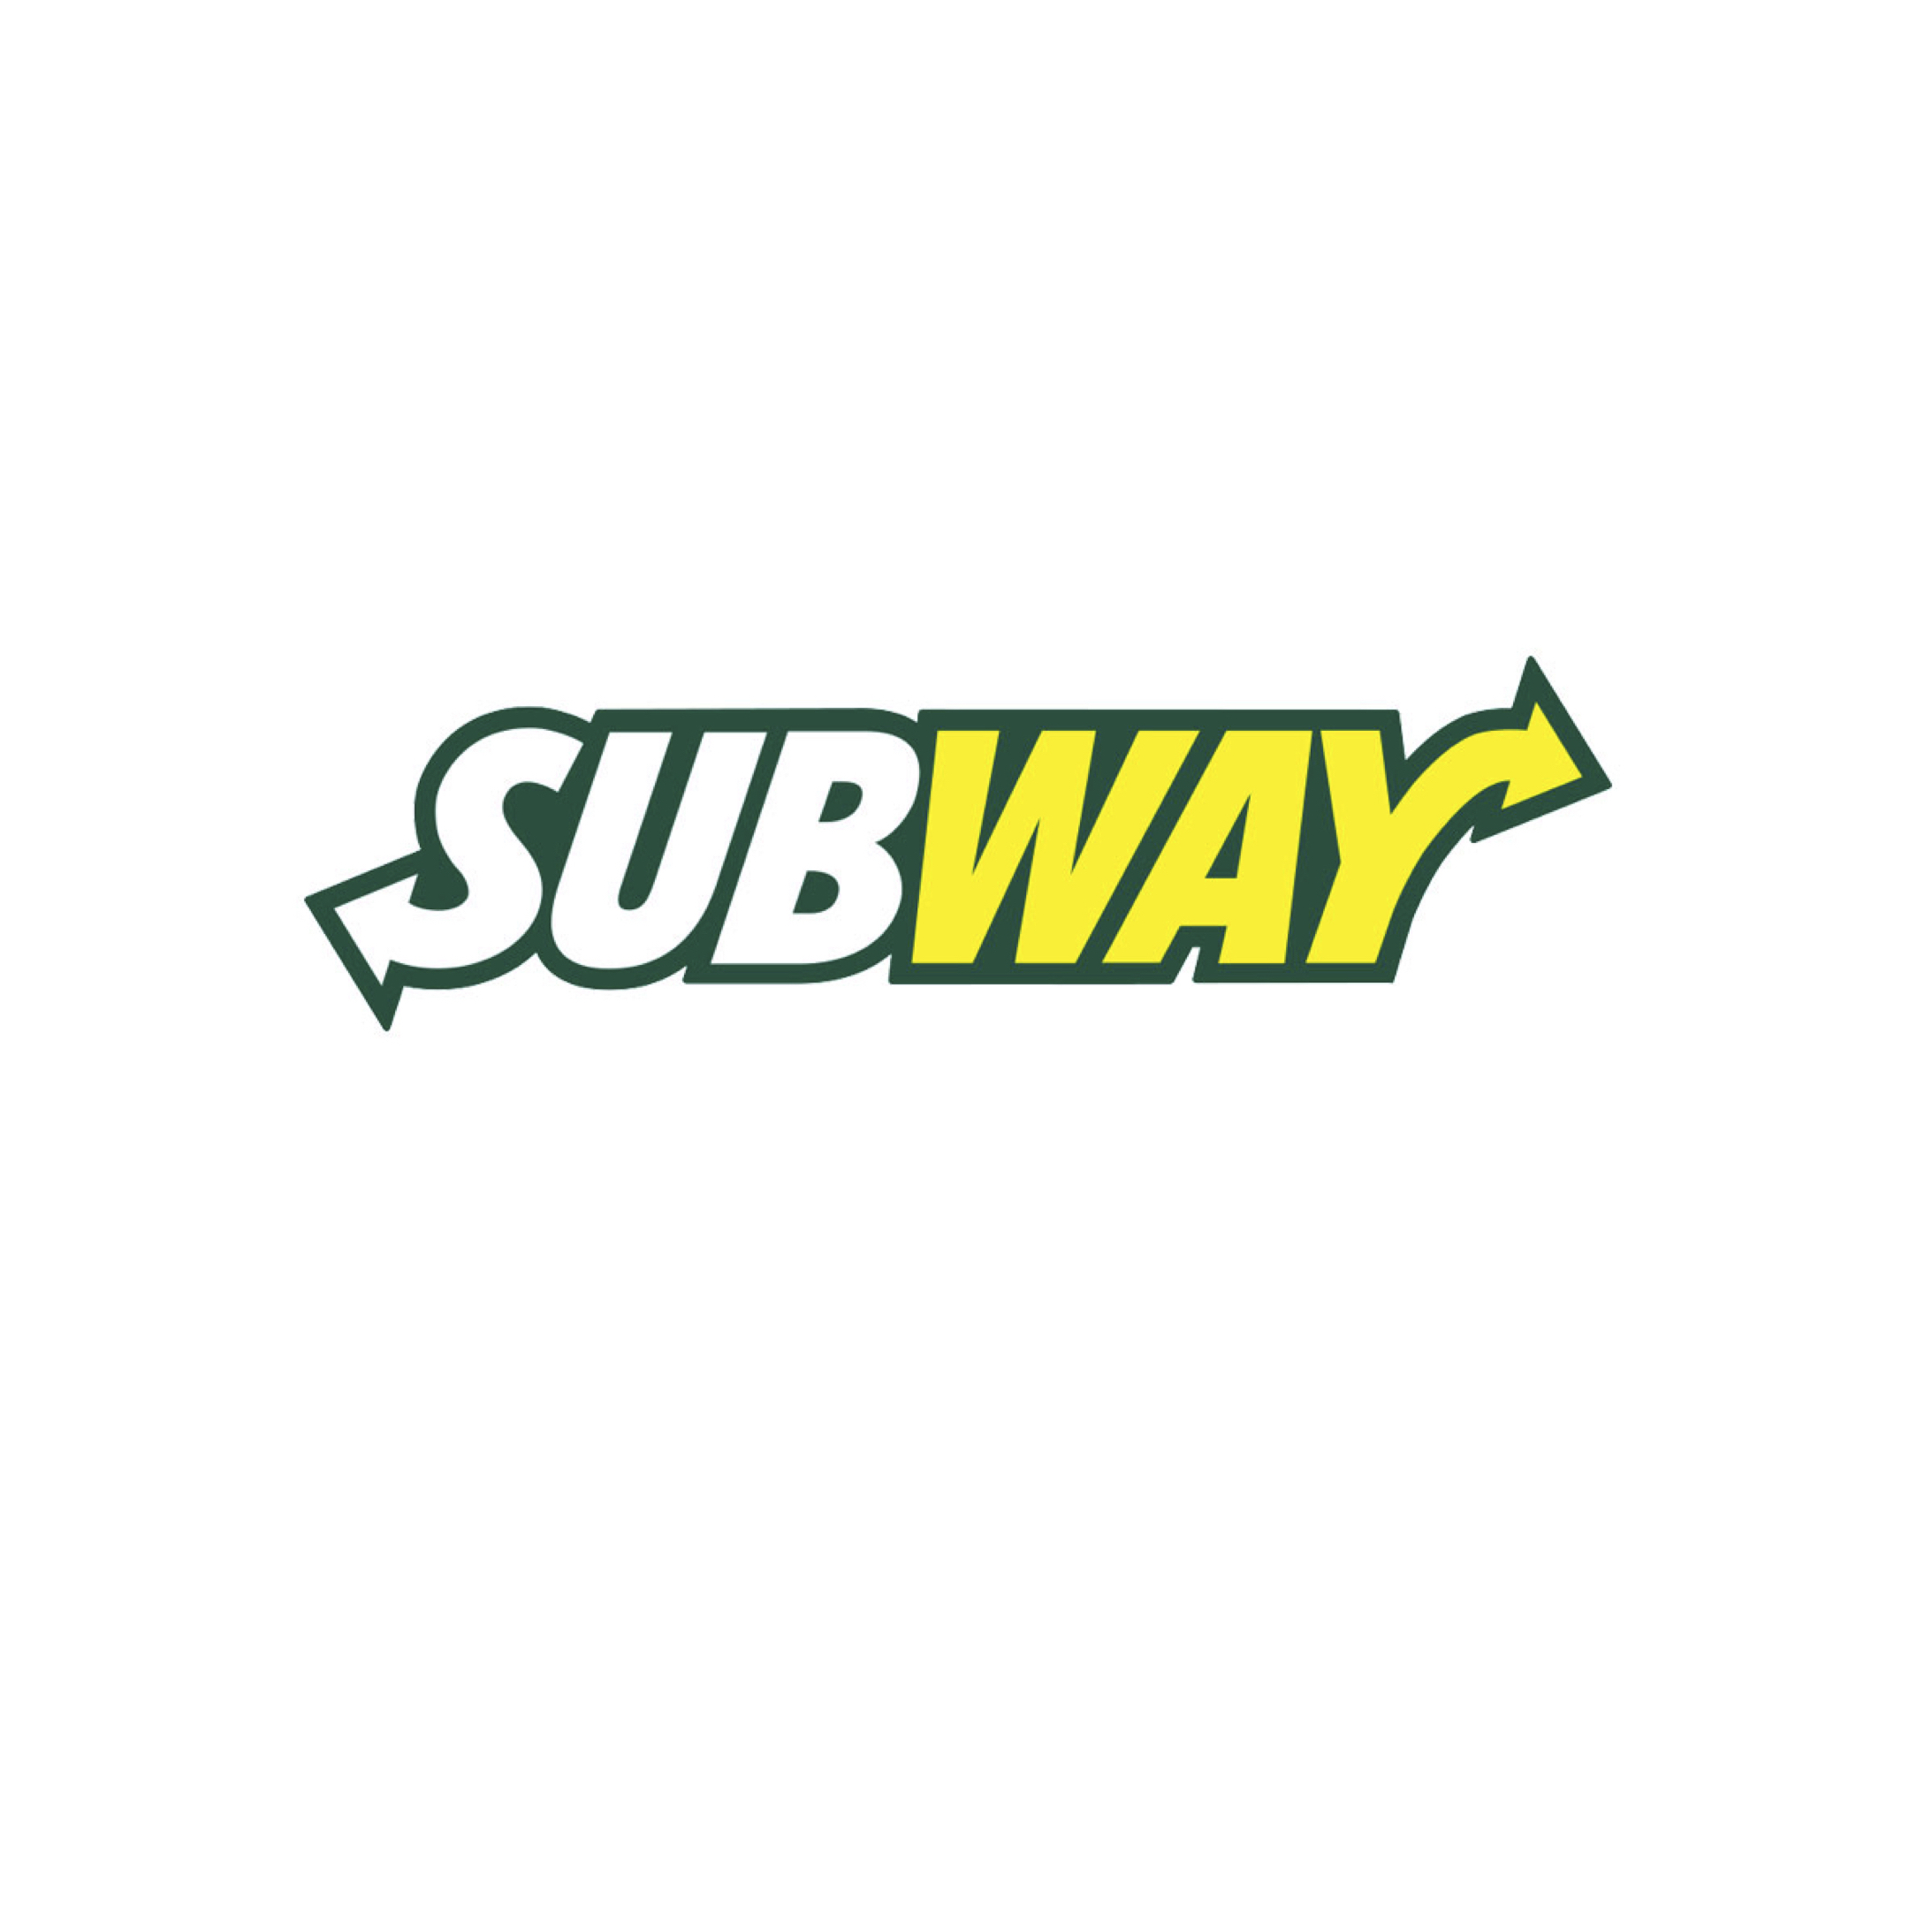 Subway_web_prepped_logo.jpg